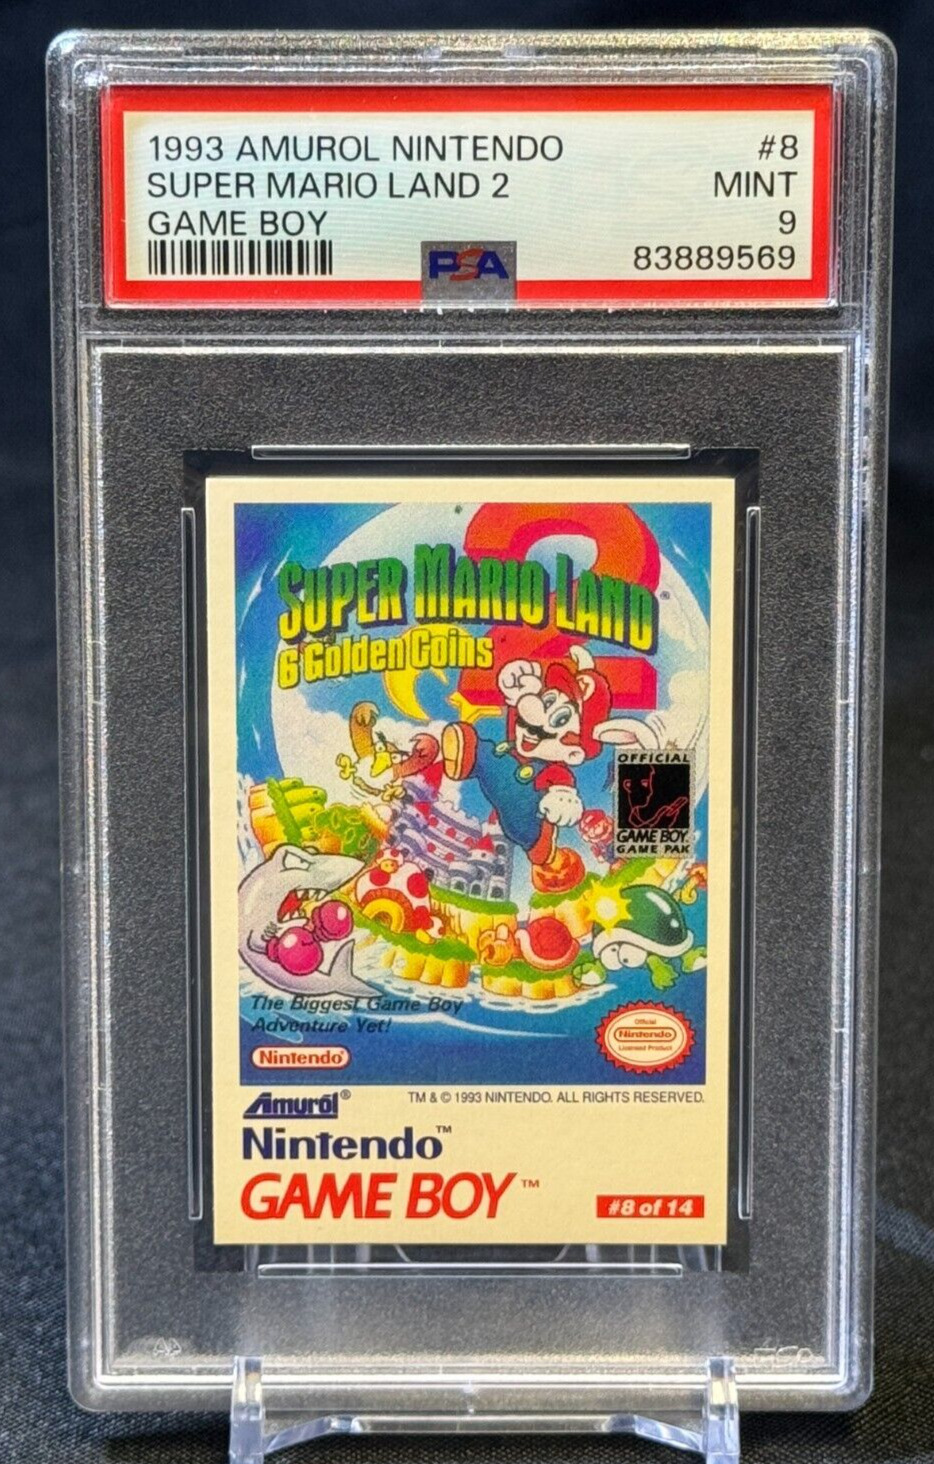 Super Mario Land 2 1993 Amurol Nintendo Game Boy Tips 8 PSA 9 MINT POP 3 Highest